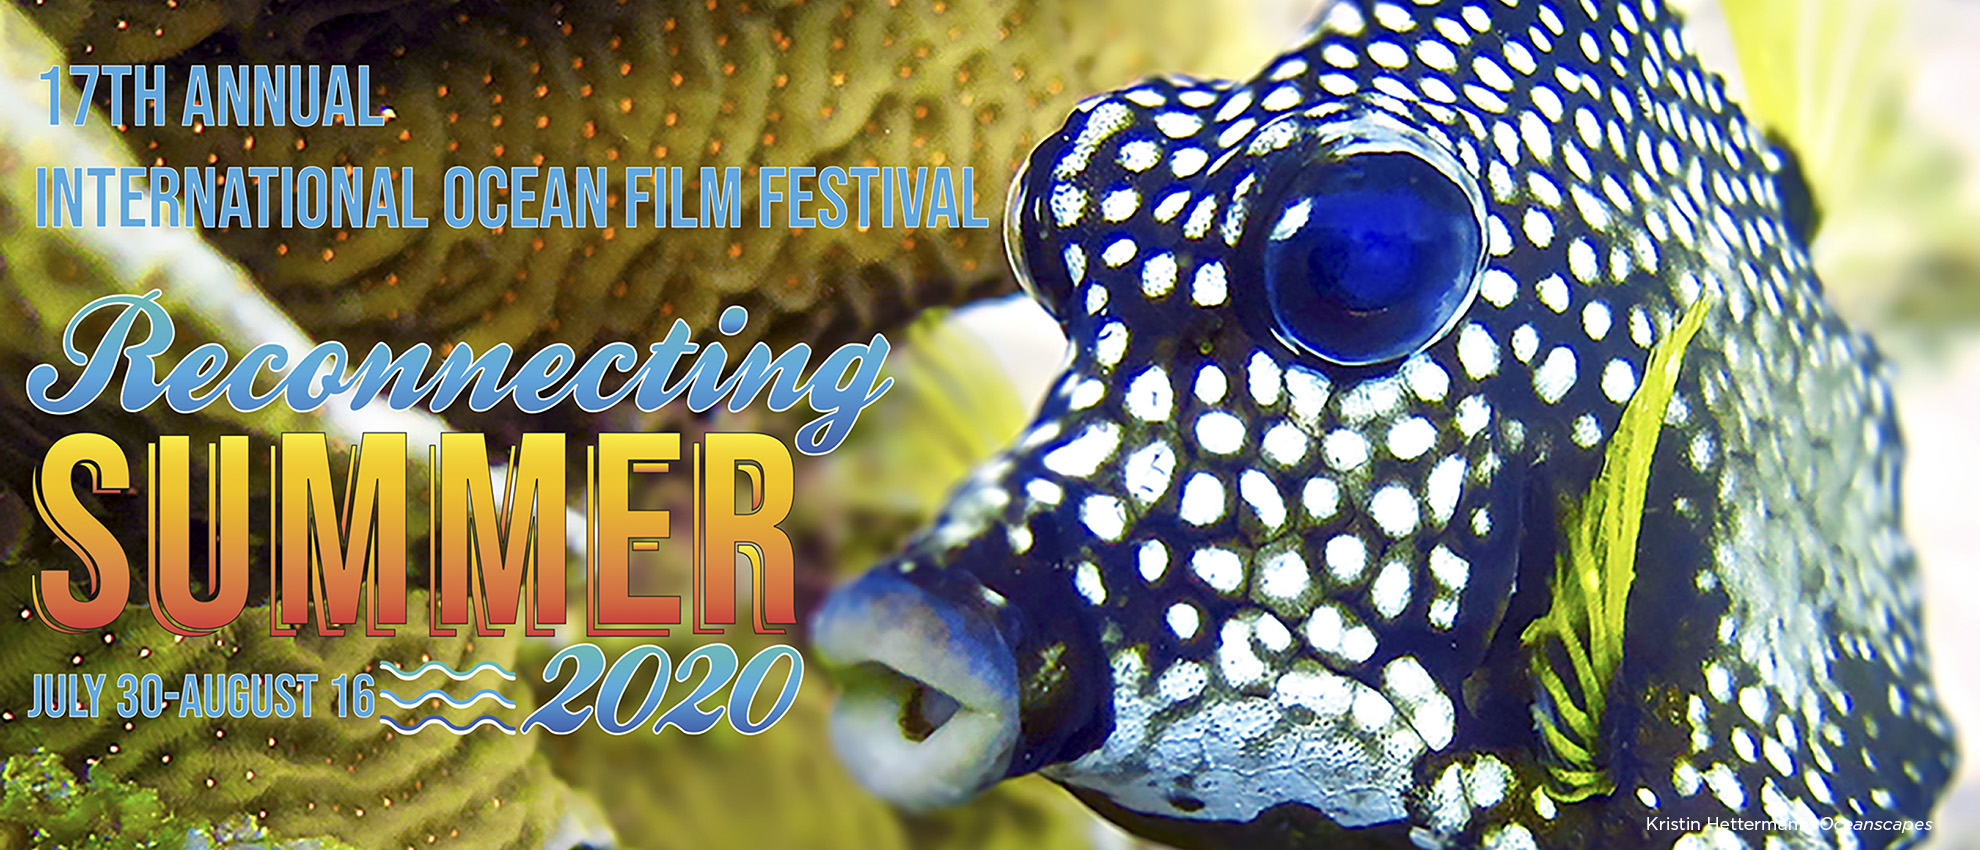 17th Annual International Ocean Film Festival